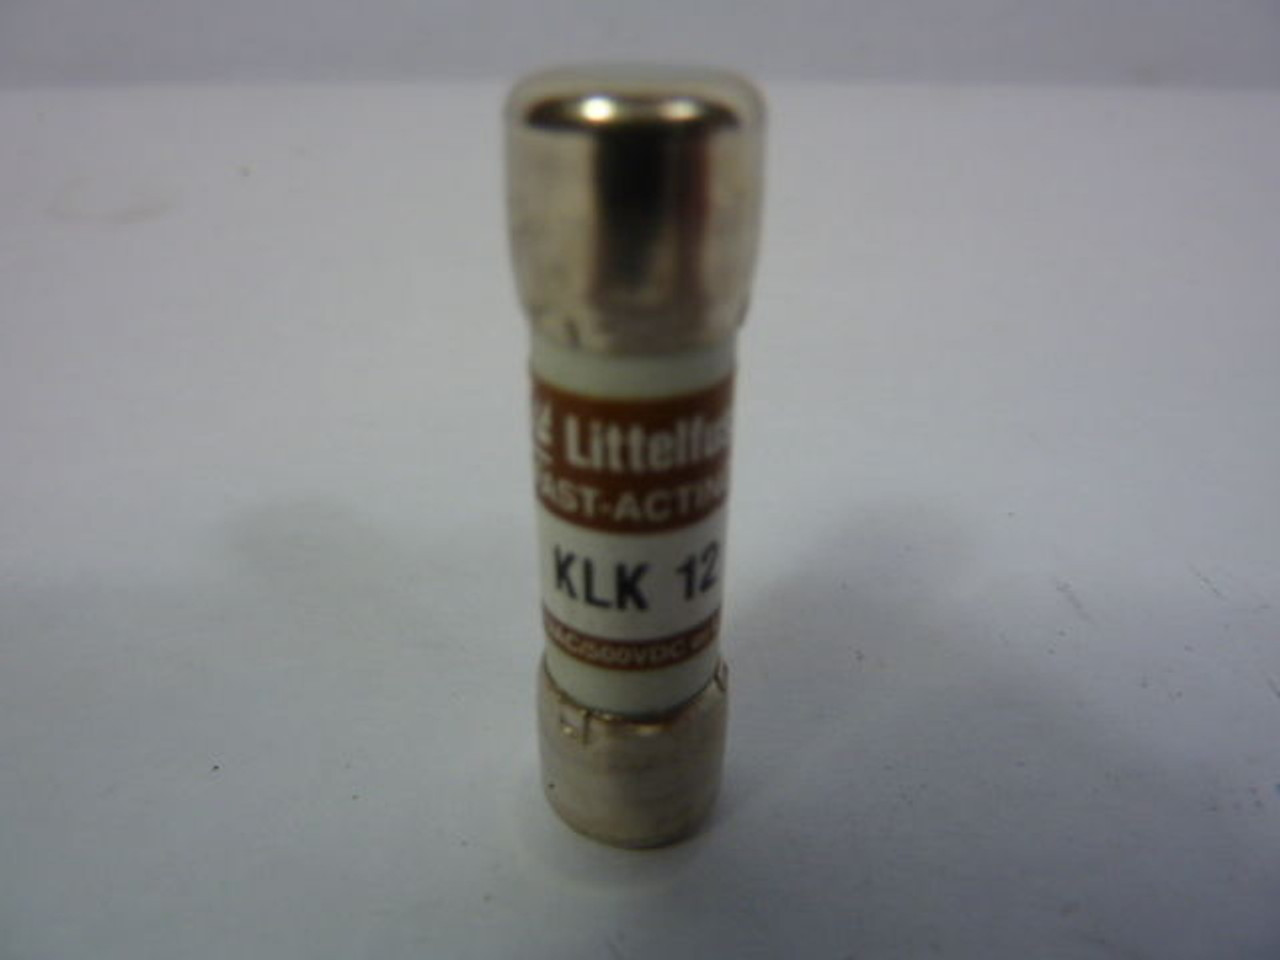 Littelfuse KLK-12 Fast Acting Fuse 1/2A 600V USED